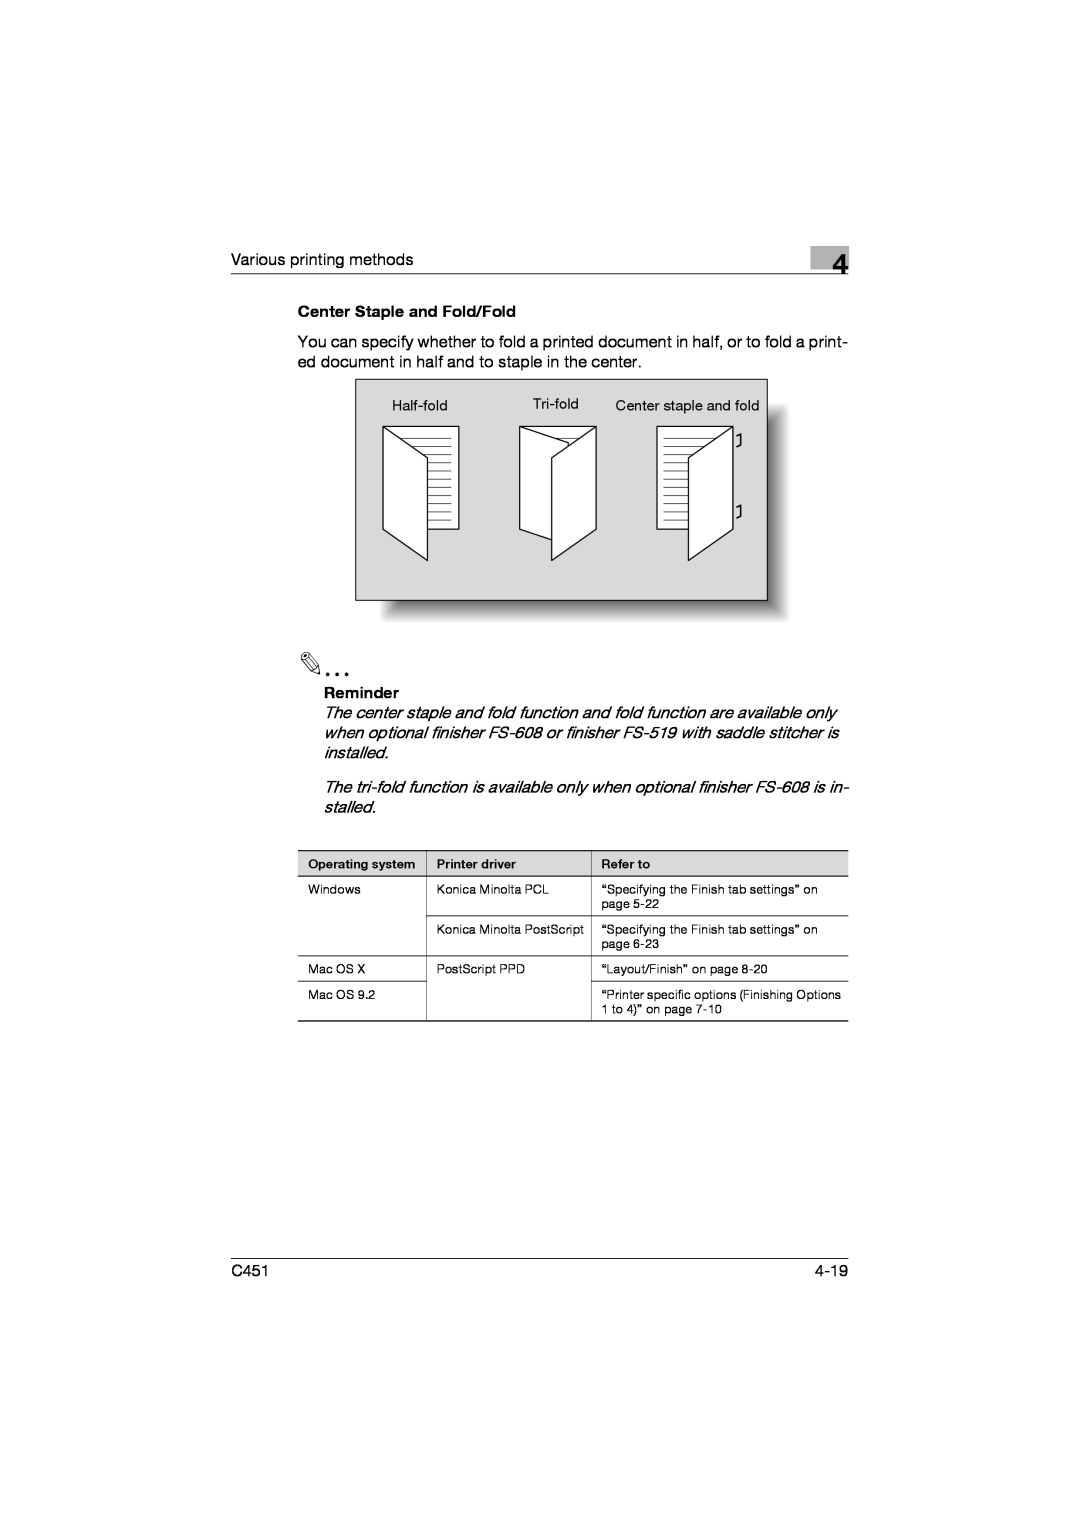 Konica Minolta C451 manual Various printing methods, Center Staple and Fold/Fold, Reminder, 4-19 